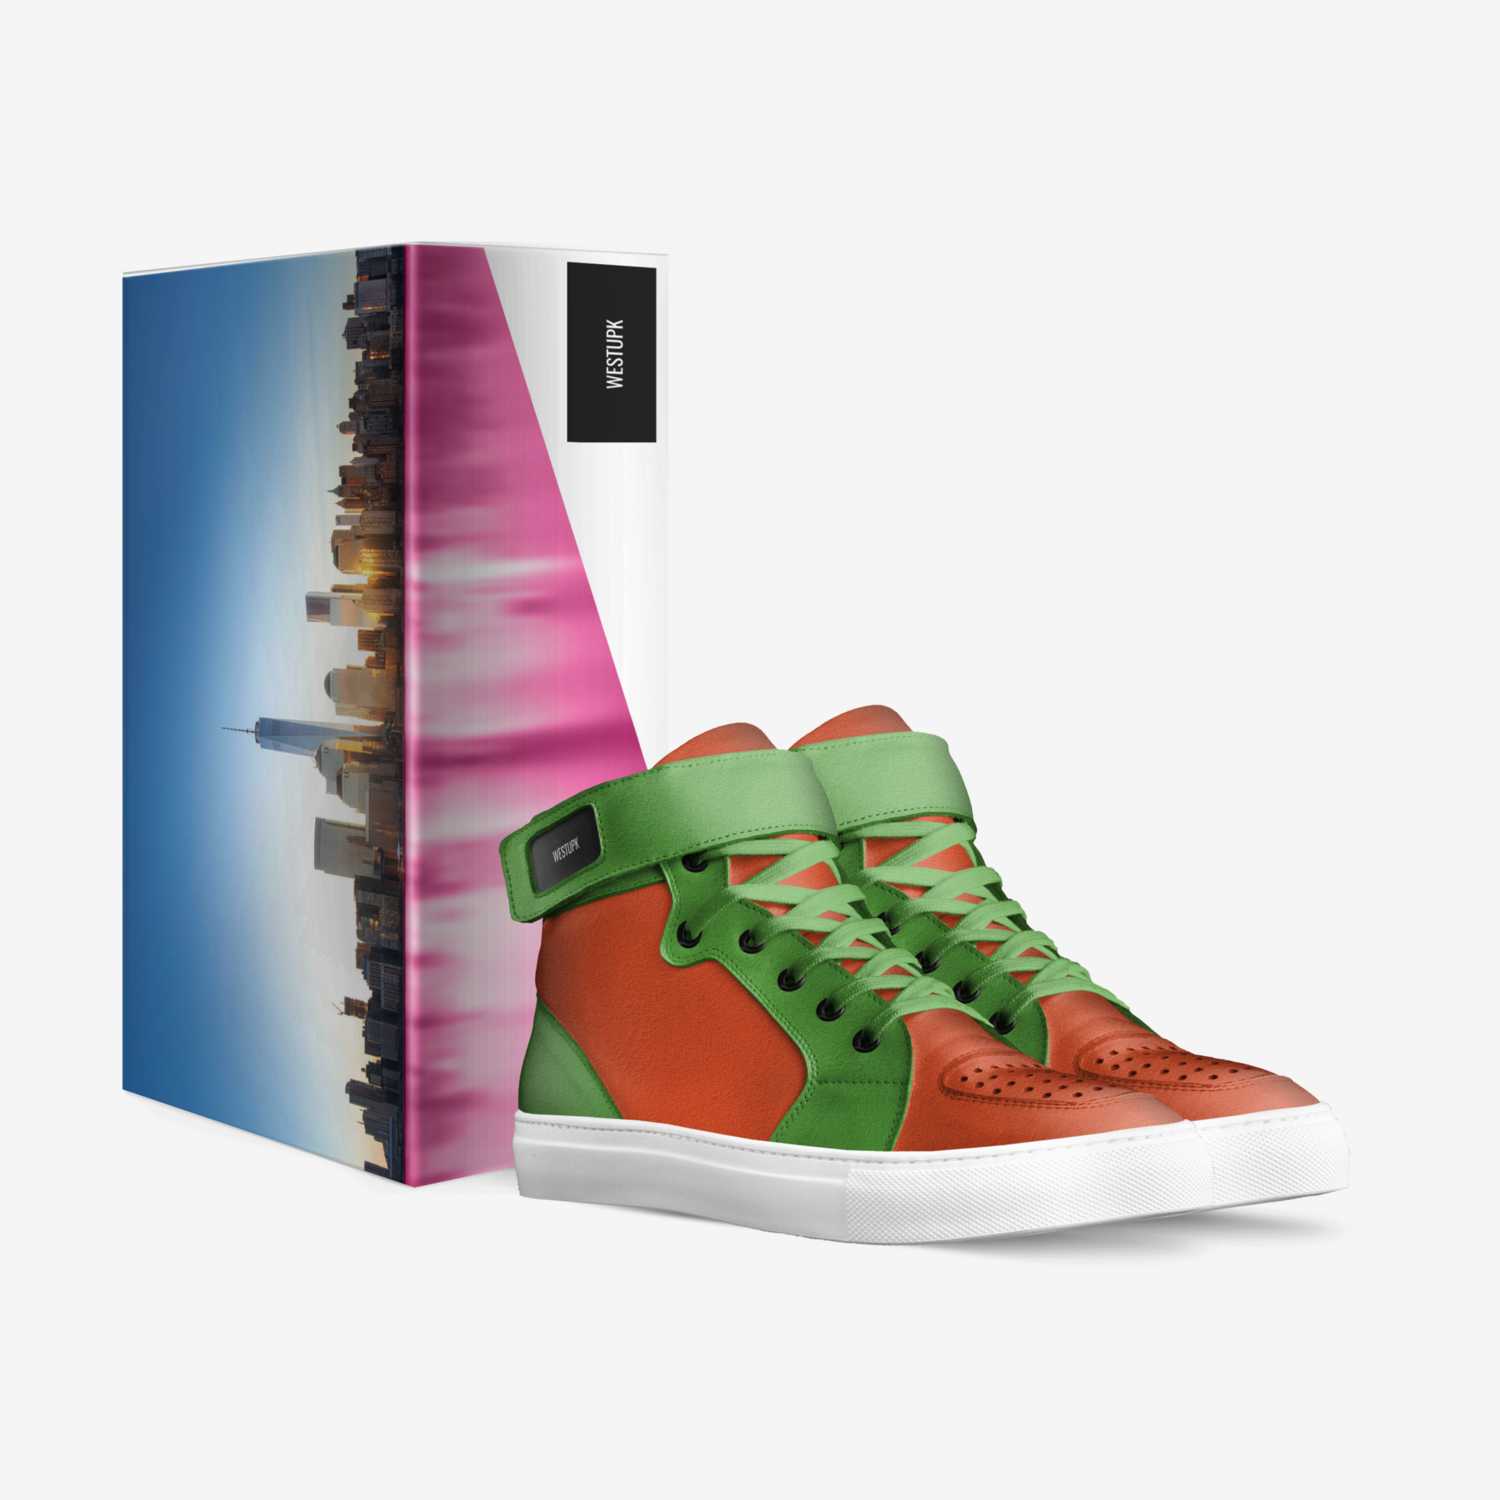 WestUpk custom made in Italy shoes by Santiagojiemen | Box view